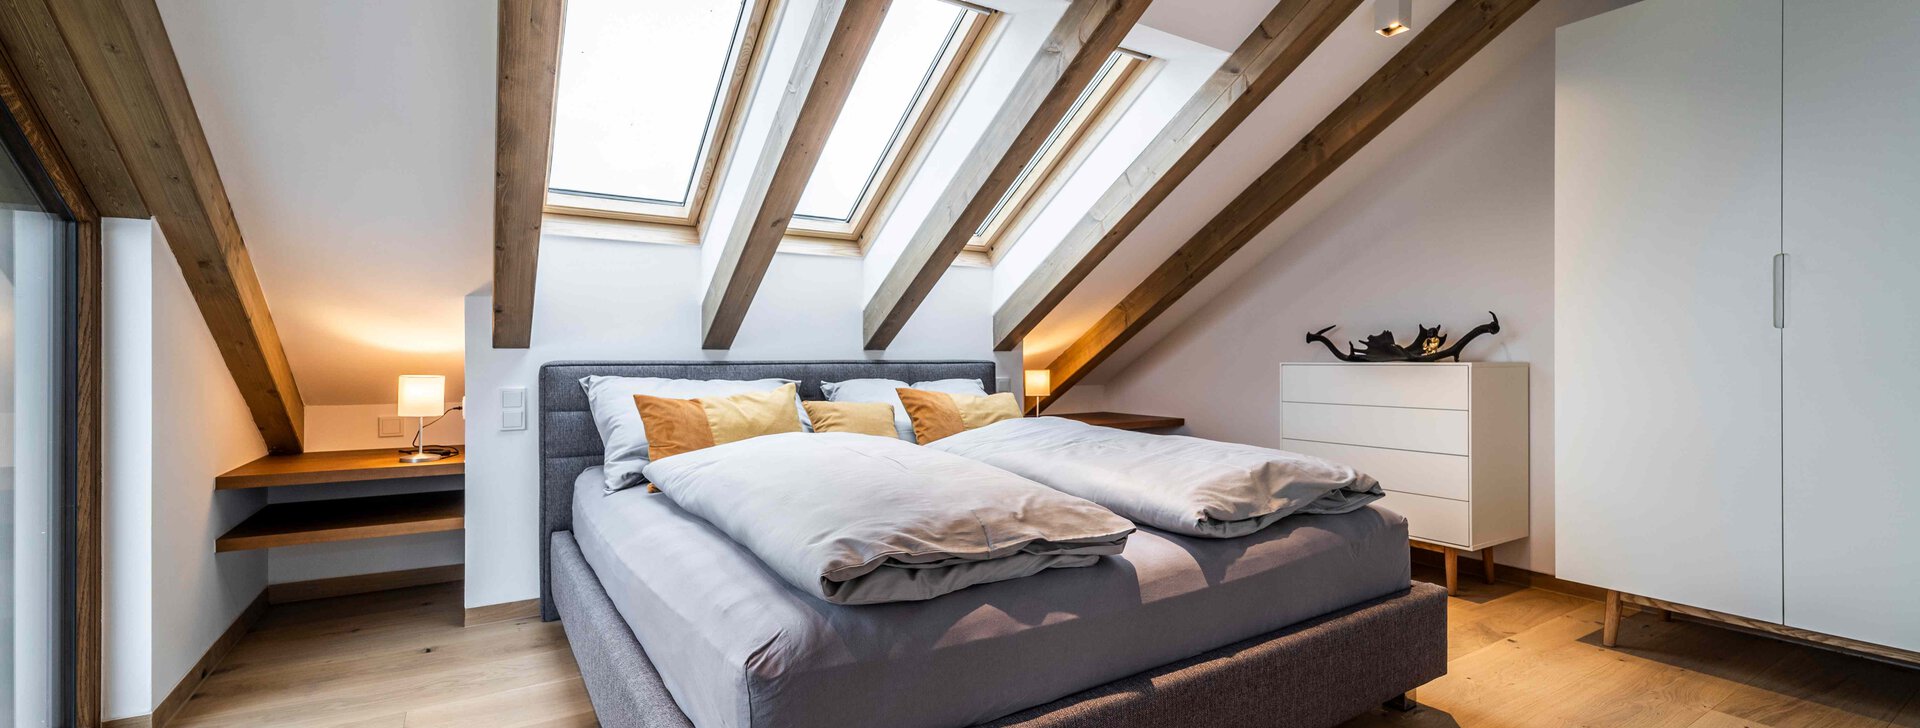 Schlafzimmer, Dachgeschosswohnung, Immobilie kaufen, Waging am See | © HausBauHaus GmbH 